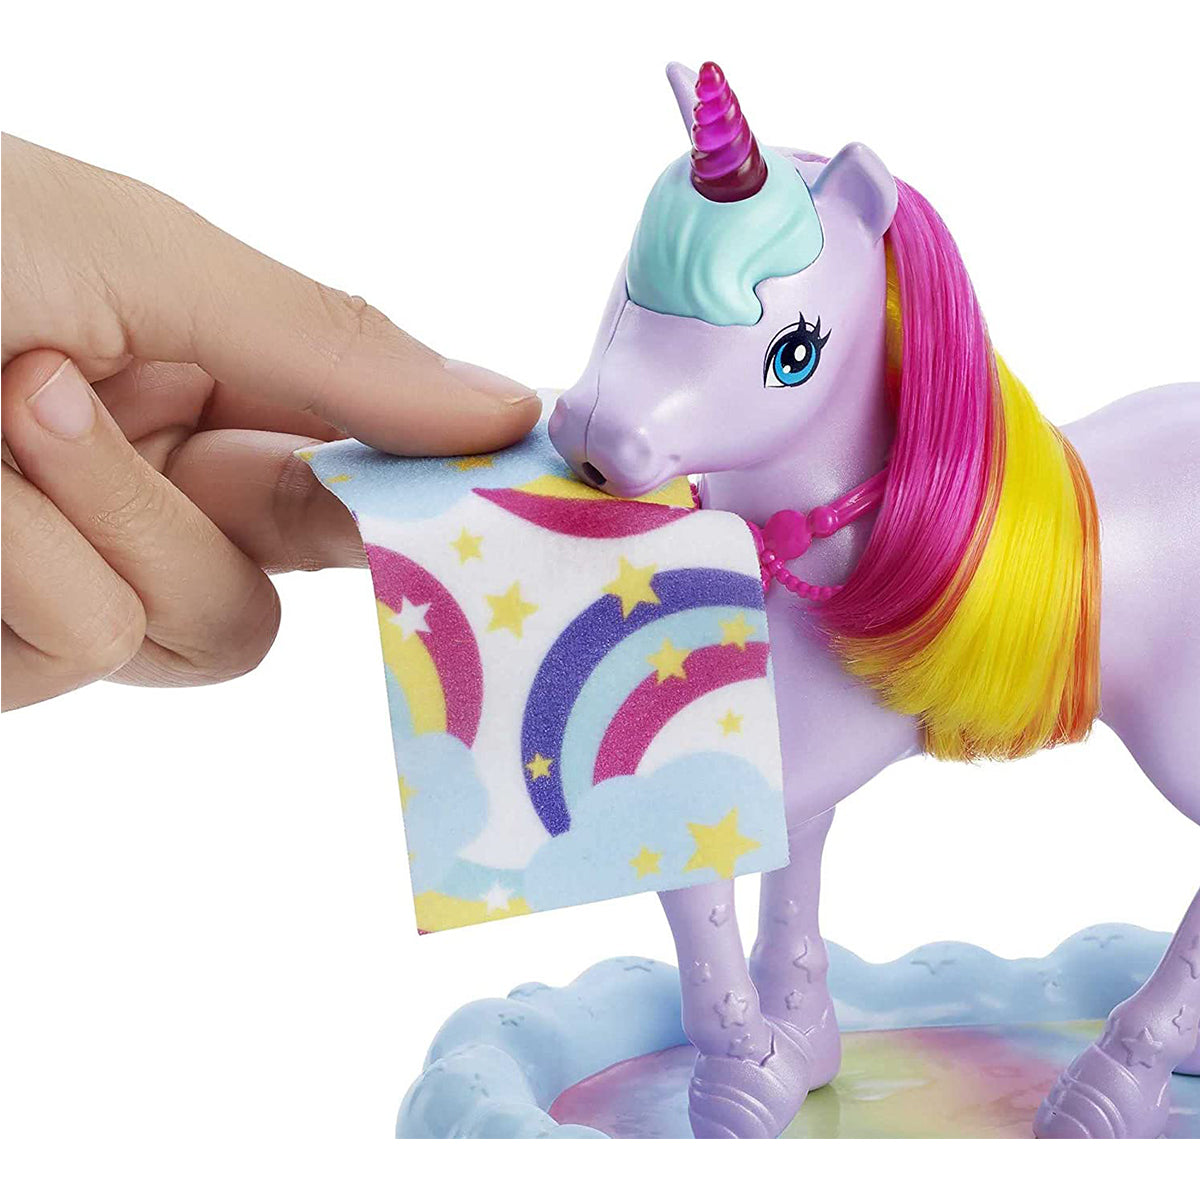 Barbie - Dreamtopia Princess with Unicorn GRG01